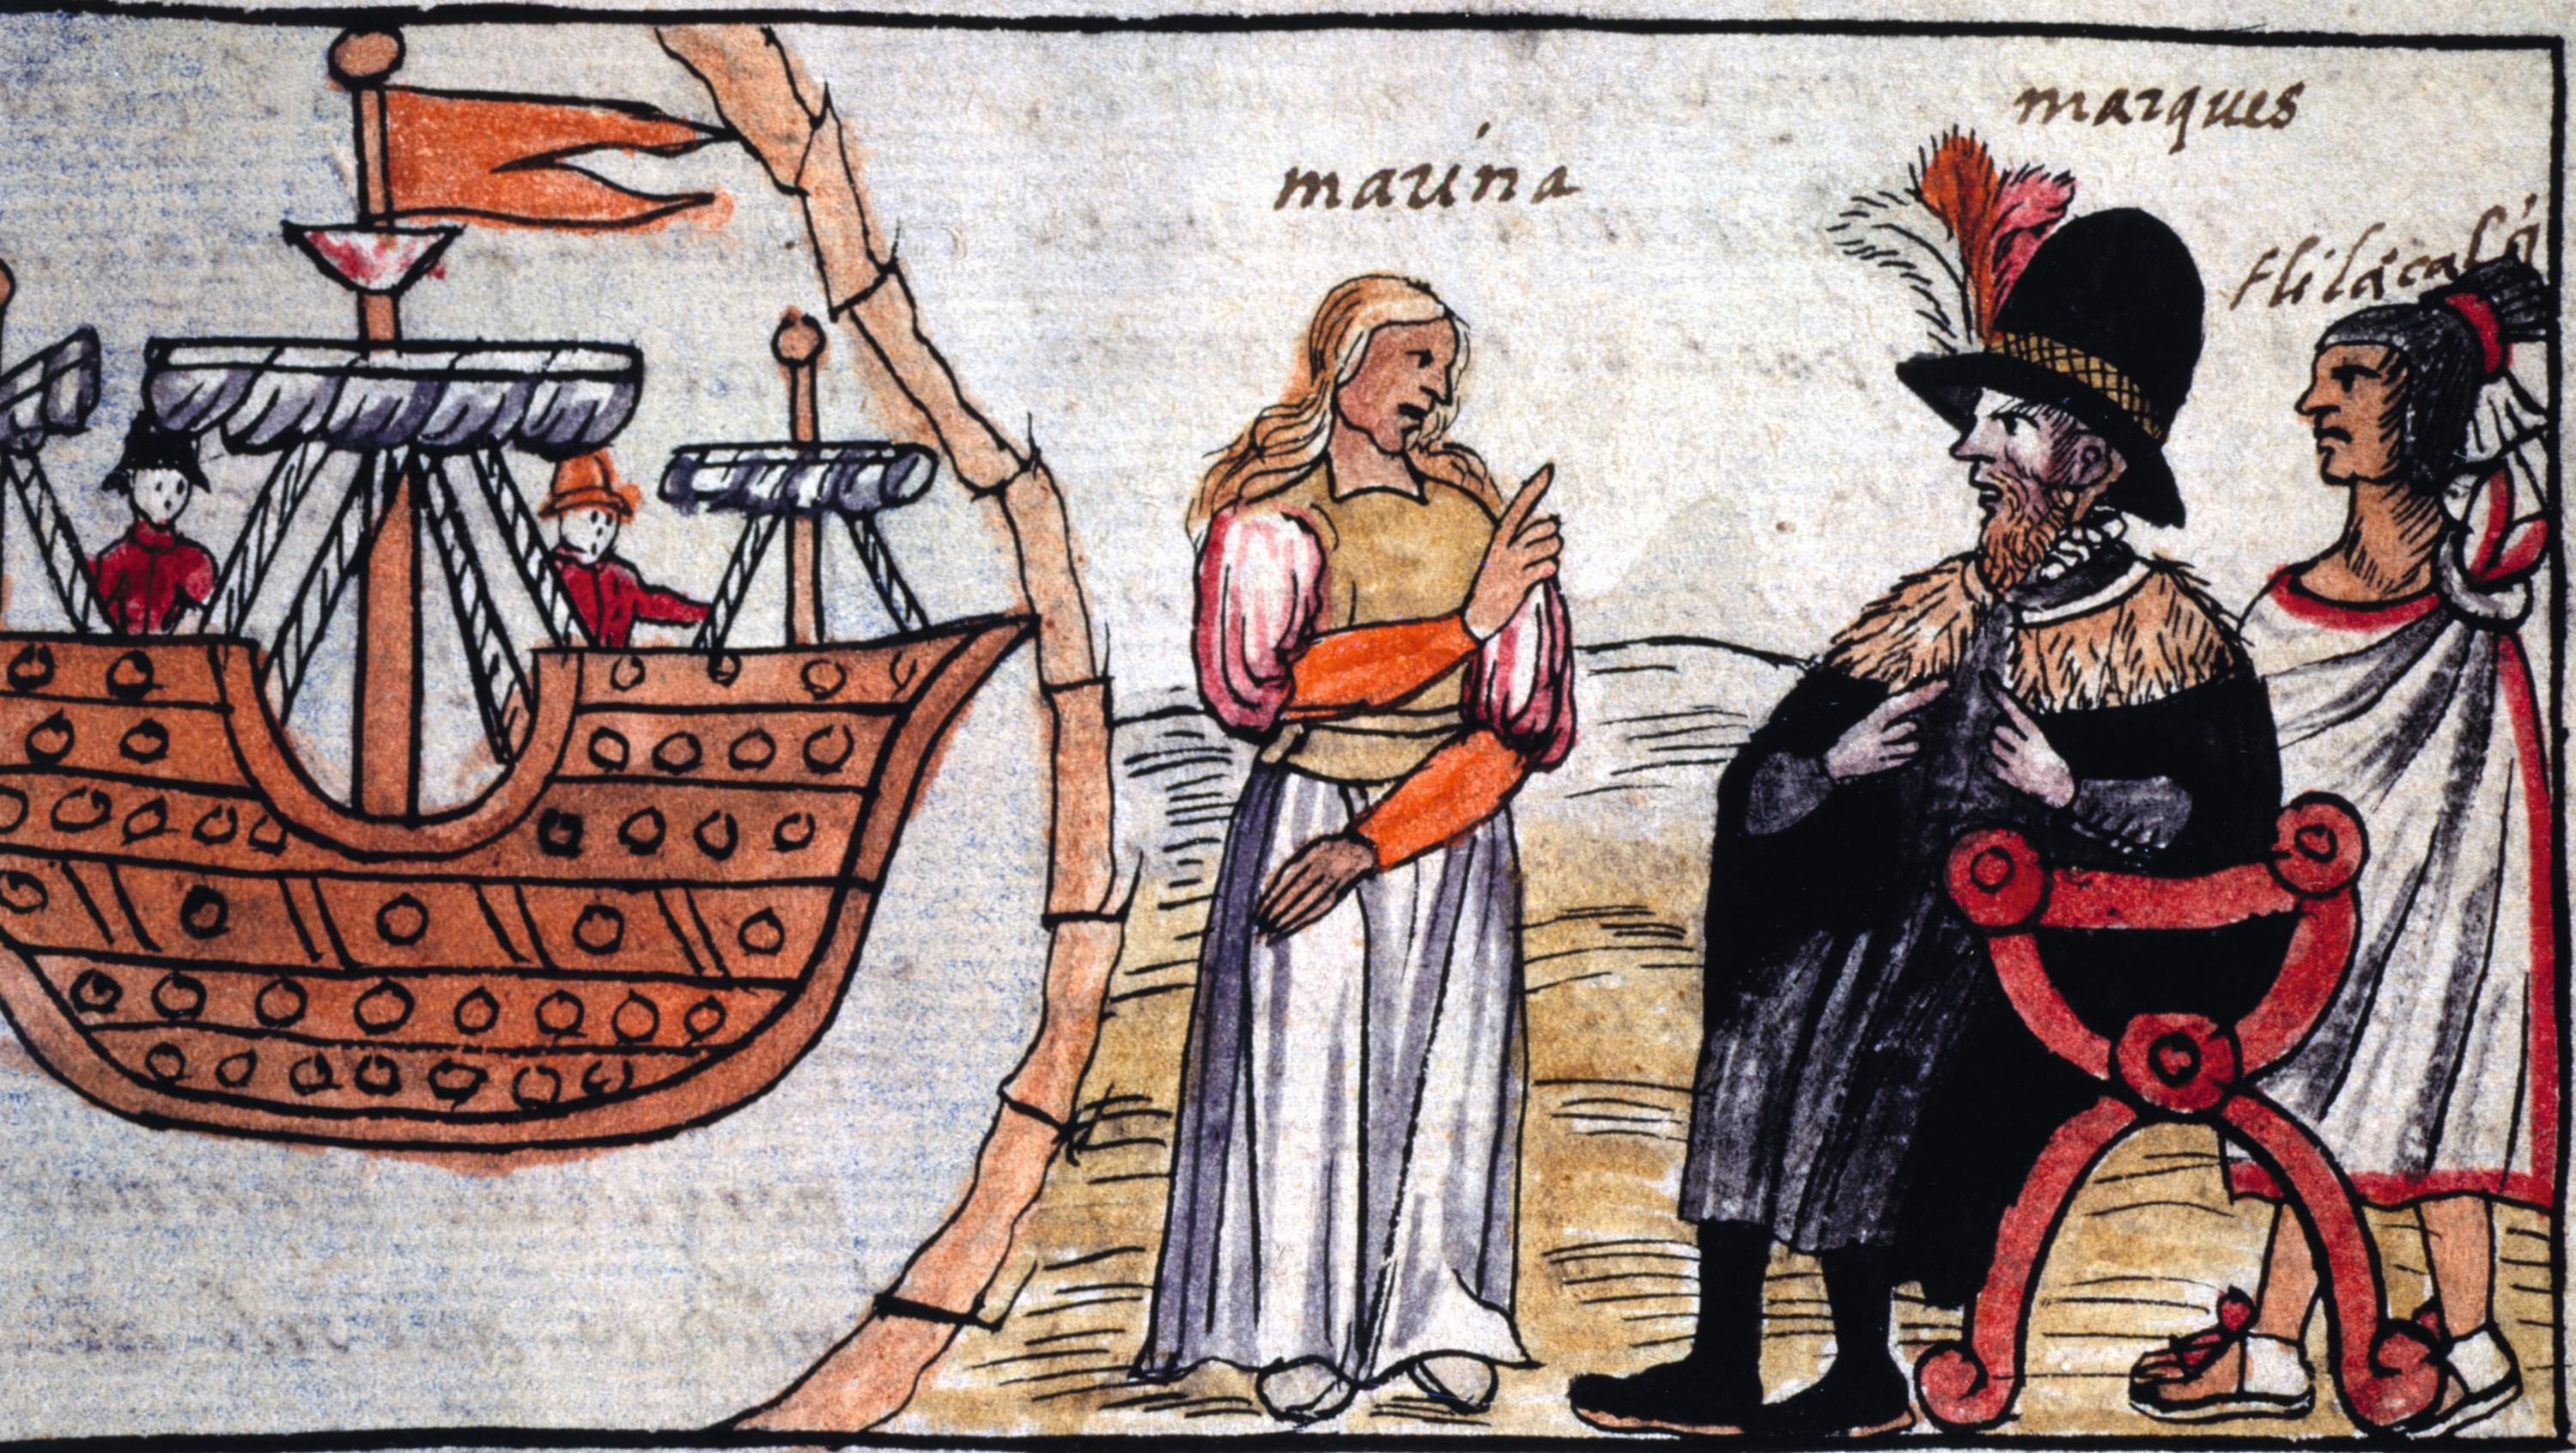 La Malinche (Marina) traduit à Cortès ce que lui dit l’émissaire de Moctezuma, Codex Duràn, 1581, gravure, 55,9 x 31,5 cm, Biblioteca National, Madrid